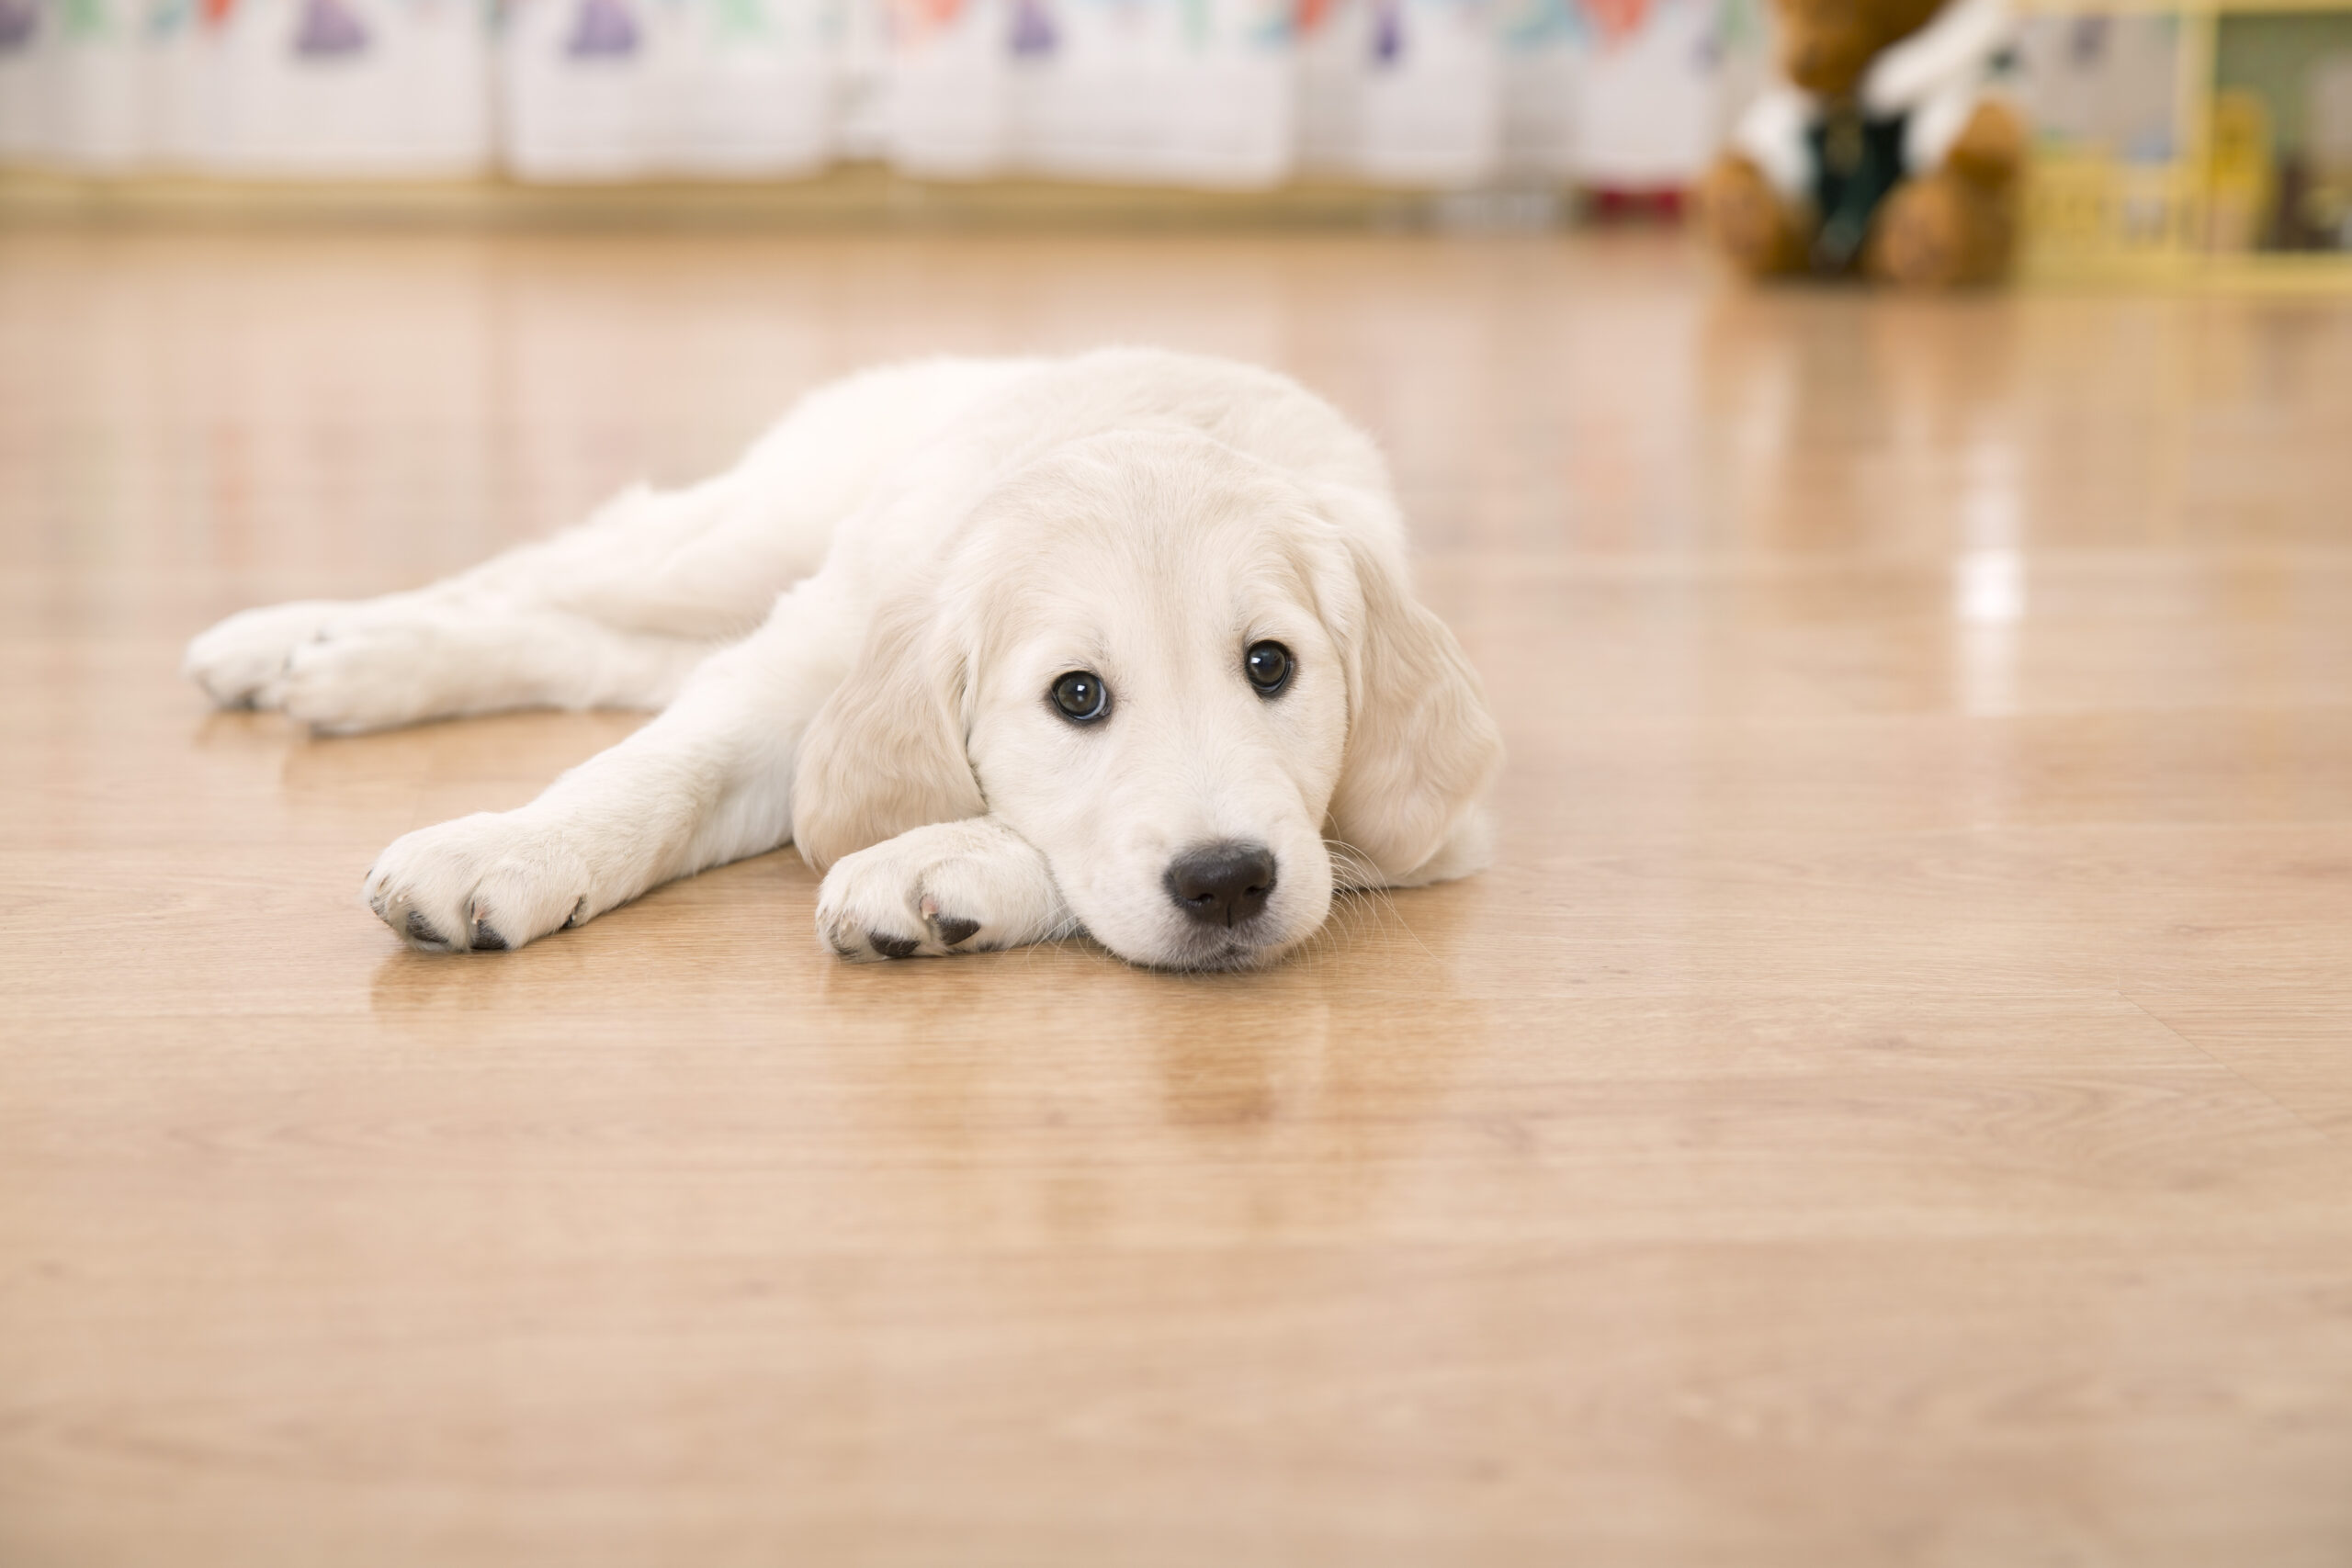 Is Hardwood Flooring Good For Pets?